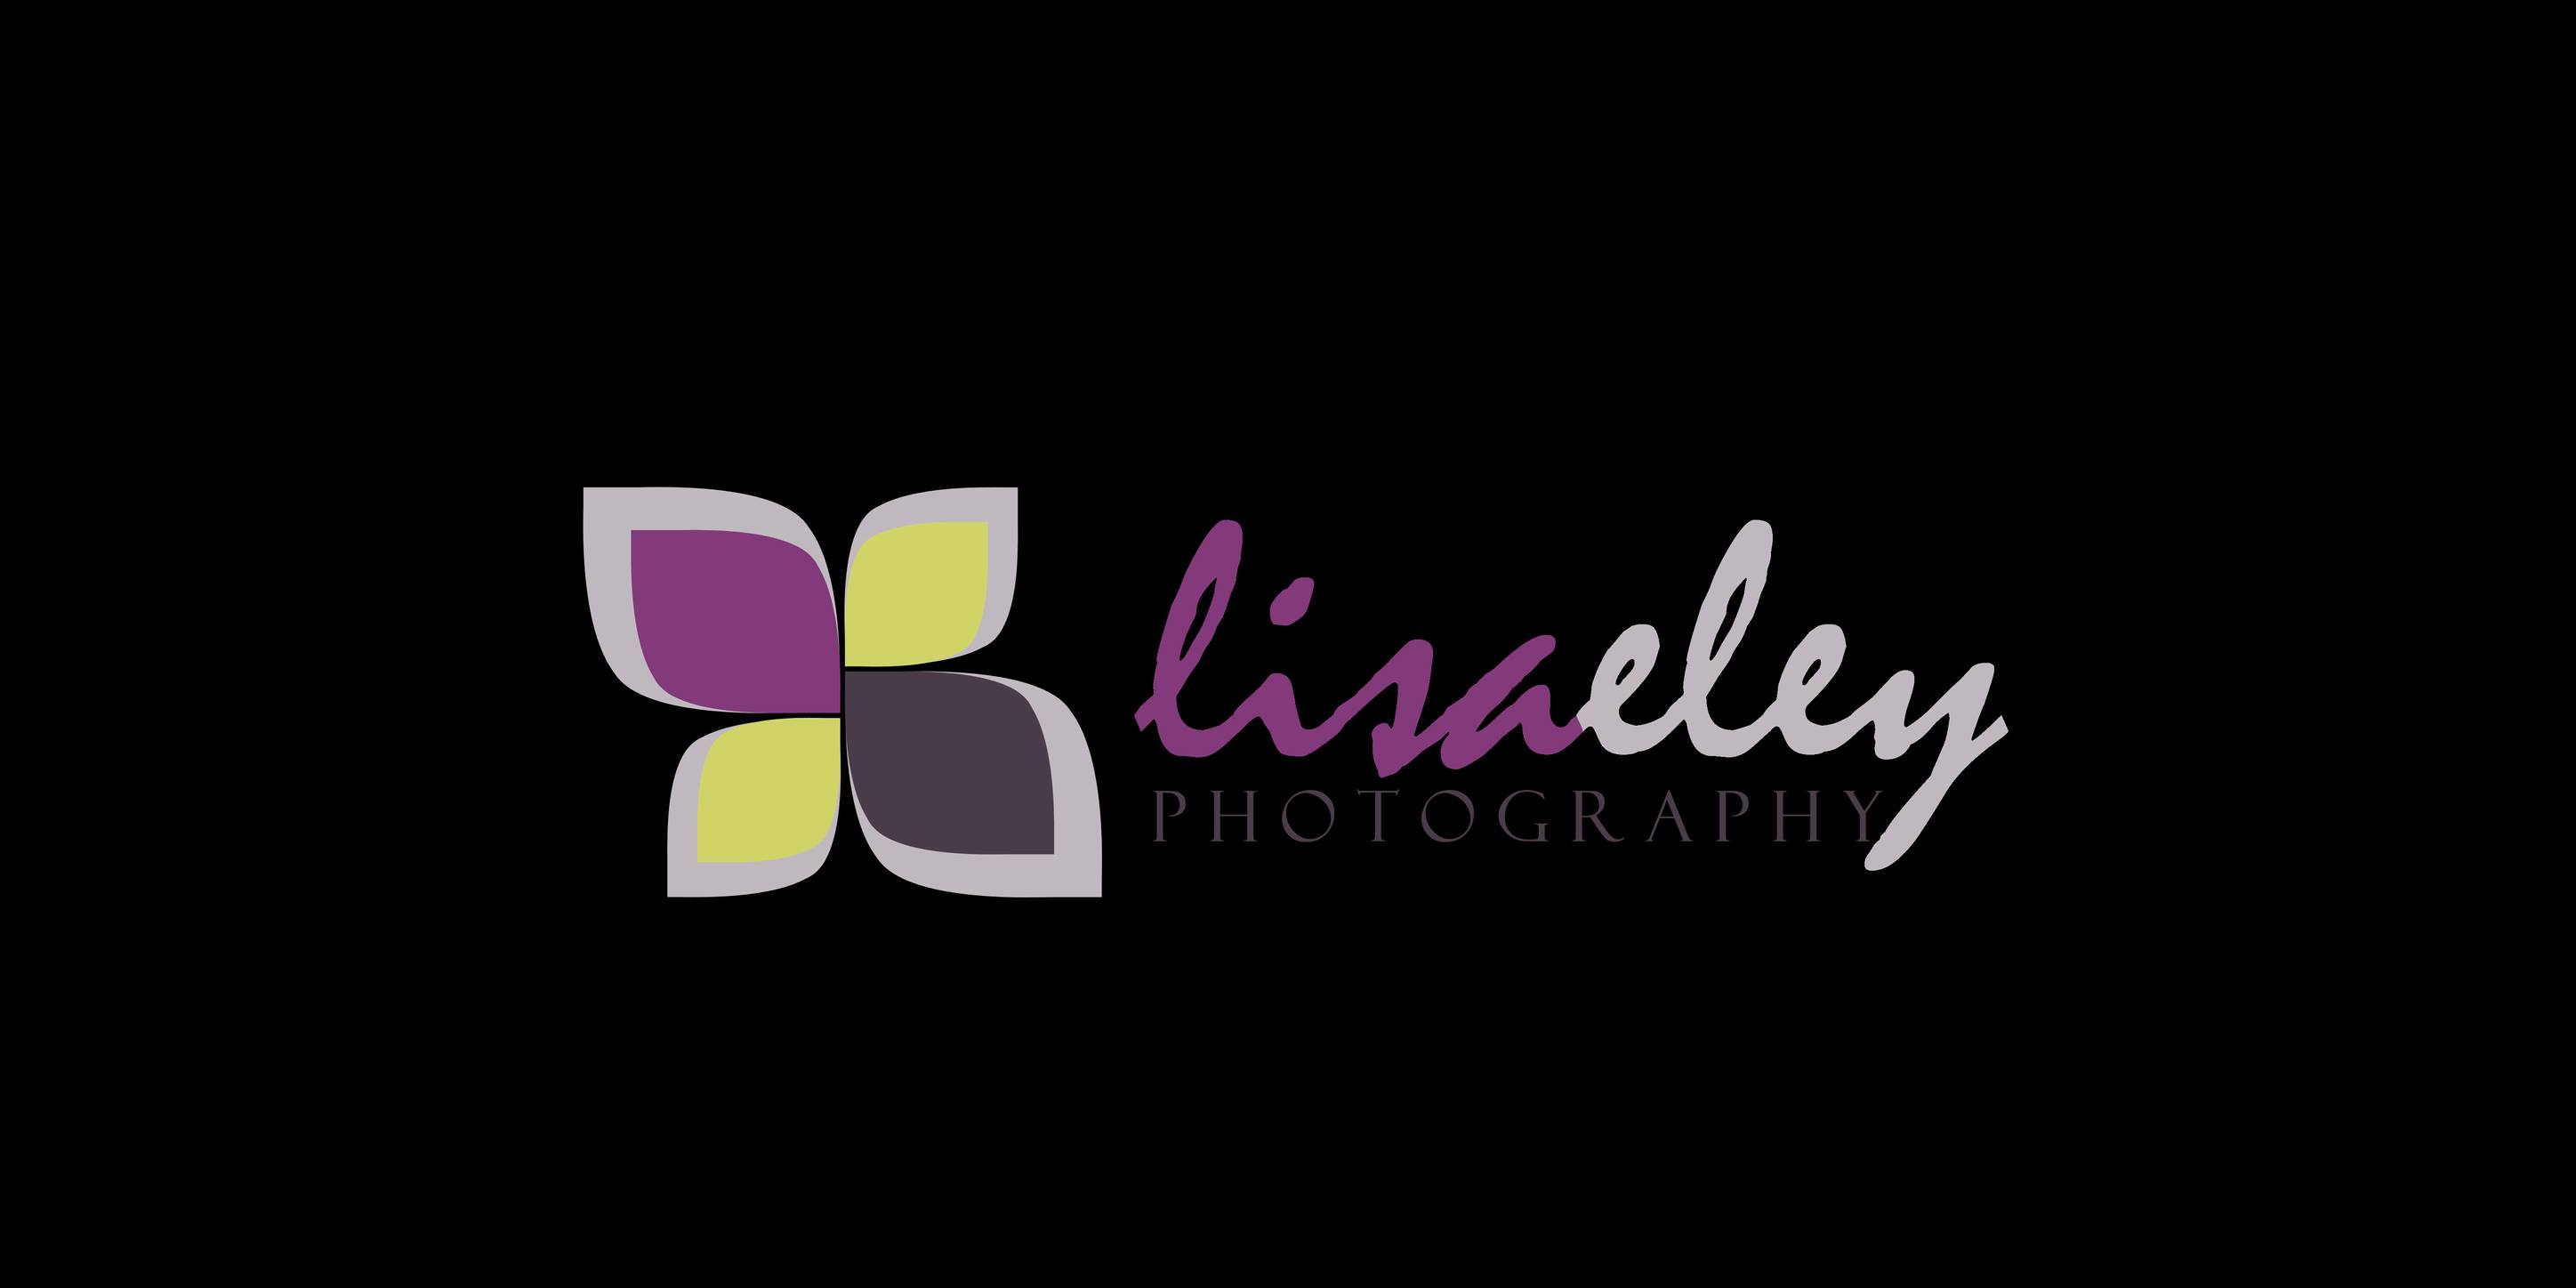 Business logo of Lisa Eley Photography